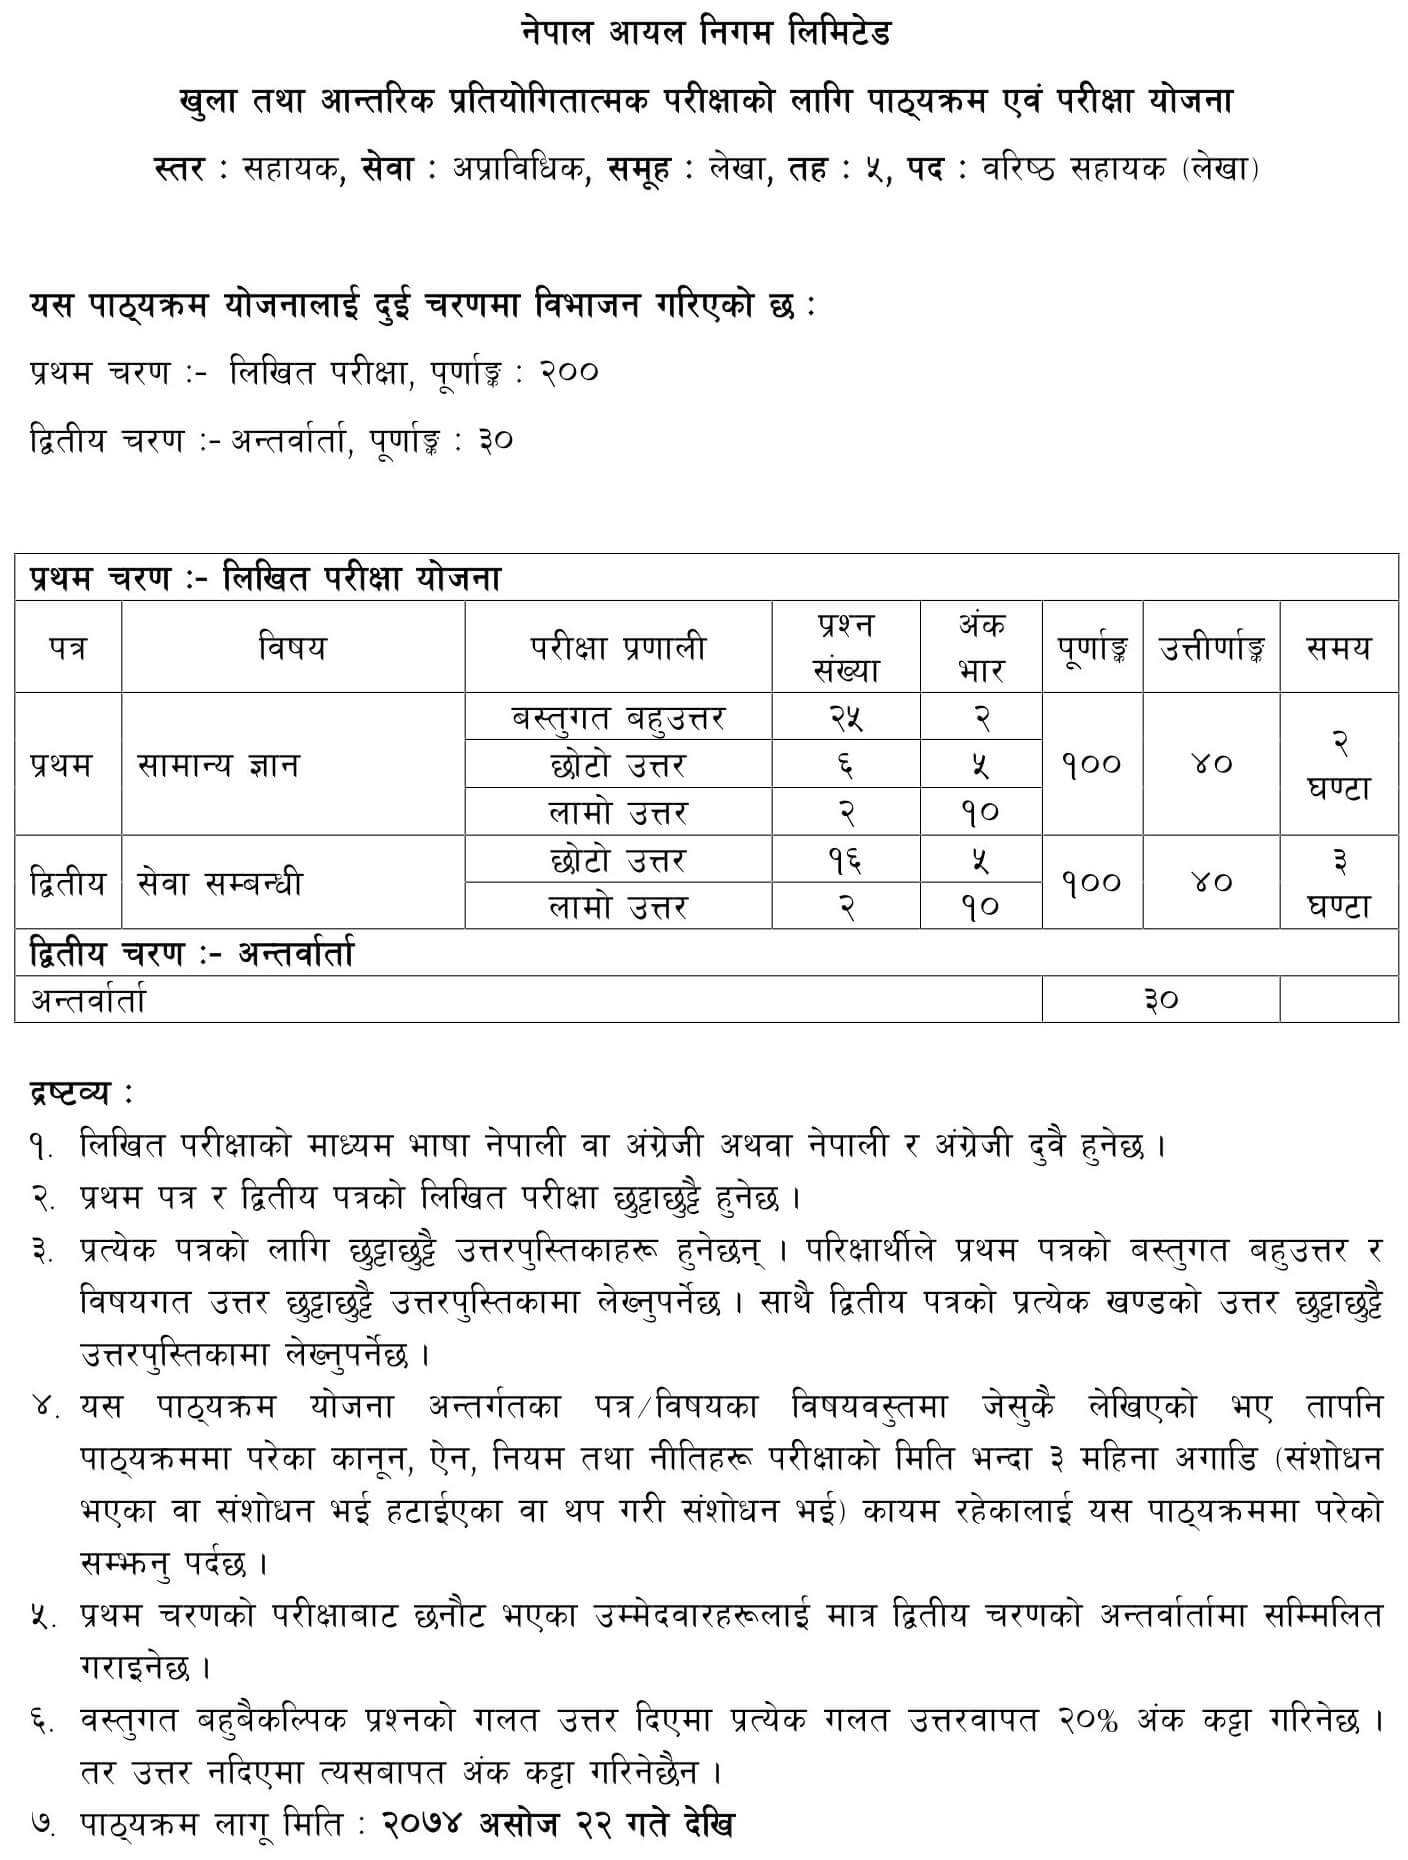 Nepal Oil Corporation - NOC Syllabus Department: Account Rank: Level 5 Senior Assistant (Account) Date: 2074/06/22. NOC Syllabus Senior Assistant Account Syllabus PDF Download